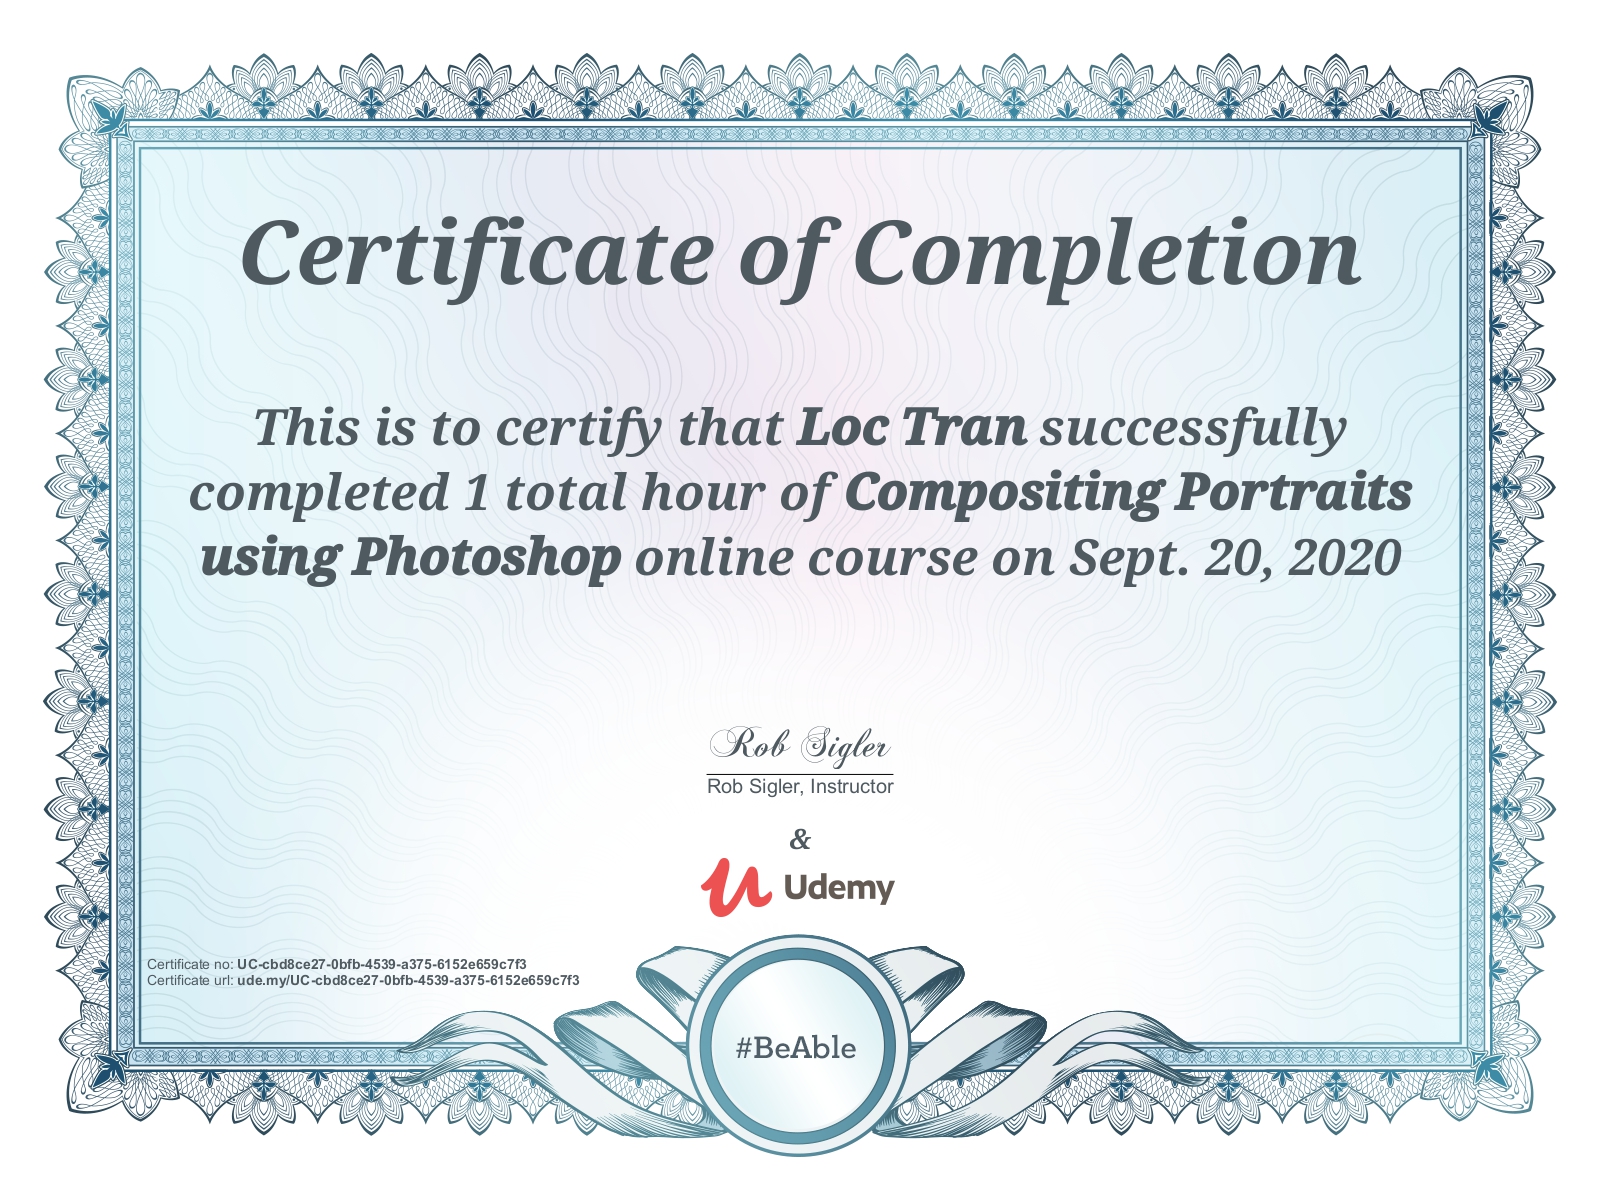 Loc Tran - Compositing Portraits using Photoshop - Certification